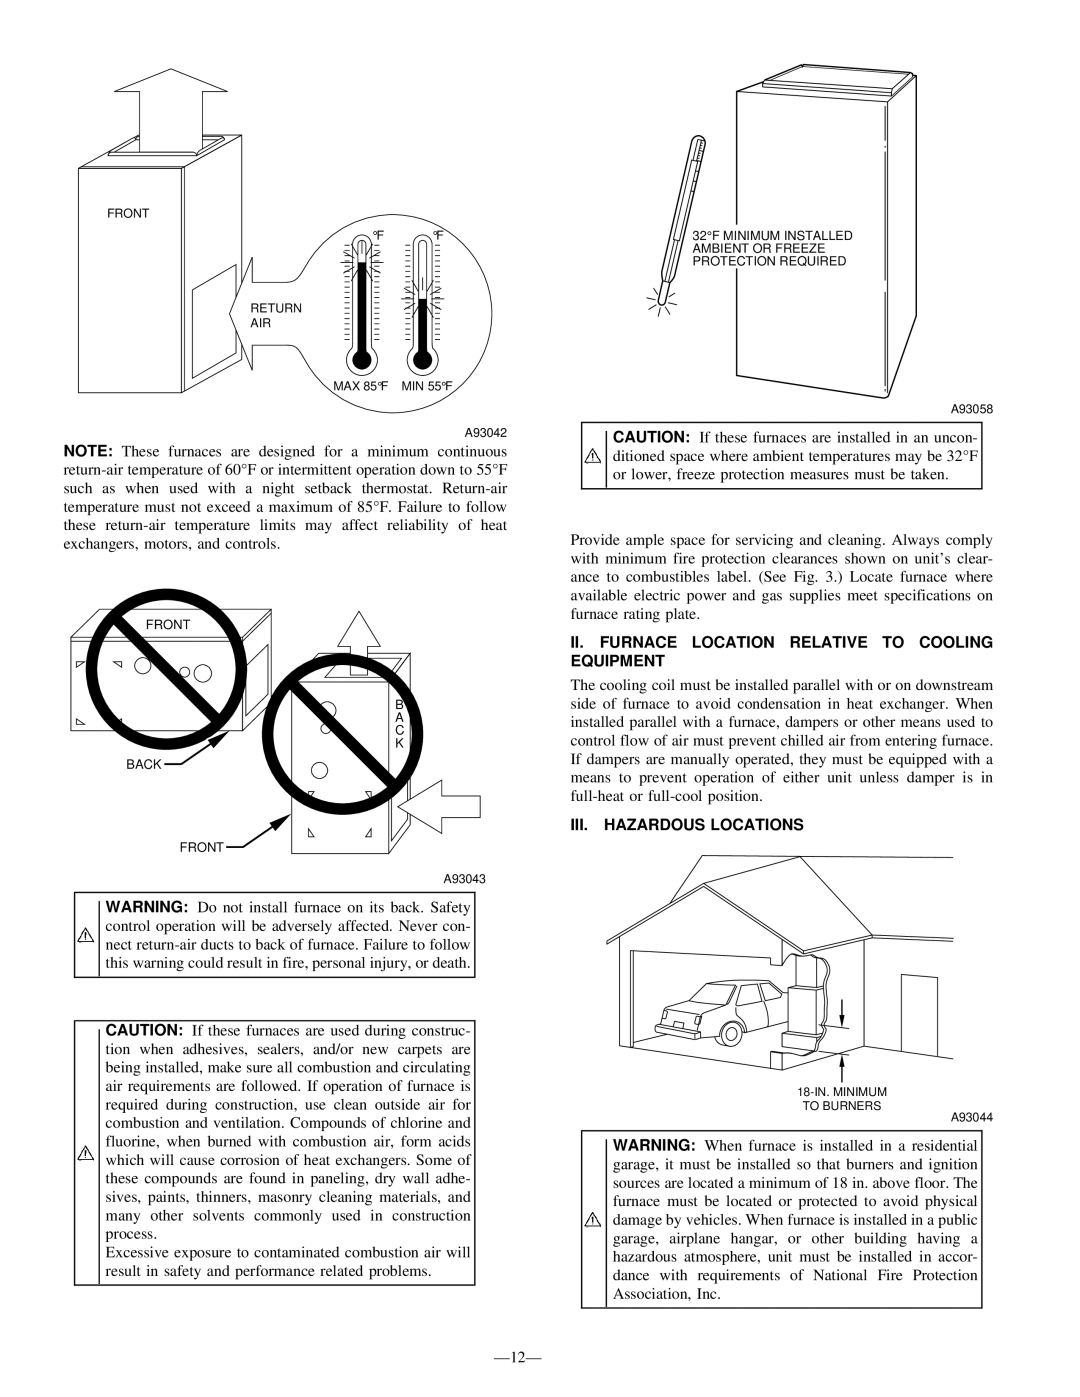 Bryant 340MAV instruction manual II. Furnace Location Relative to Cooling Equipment, III. Hazardous Locations 